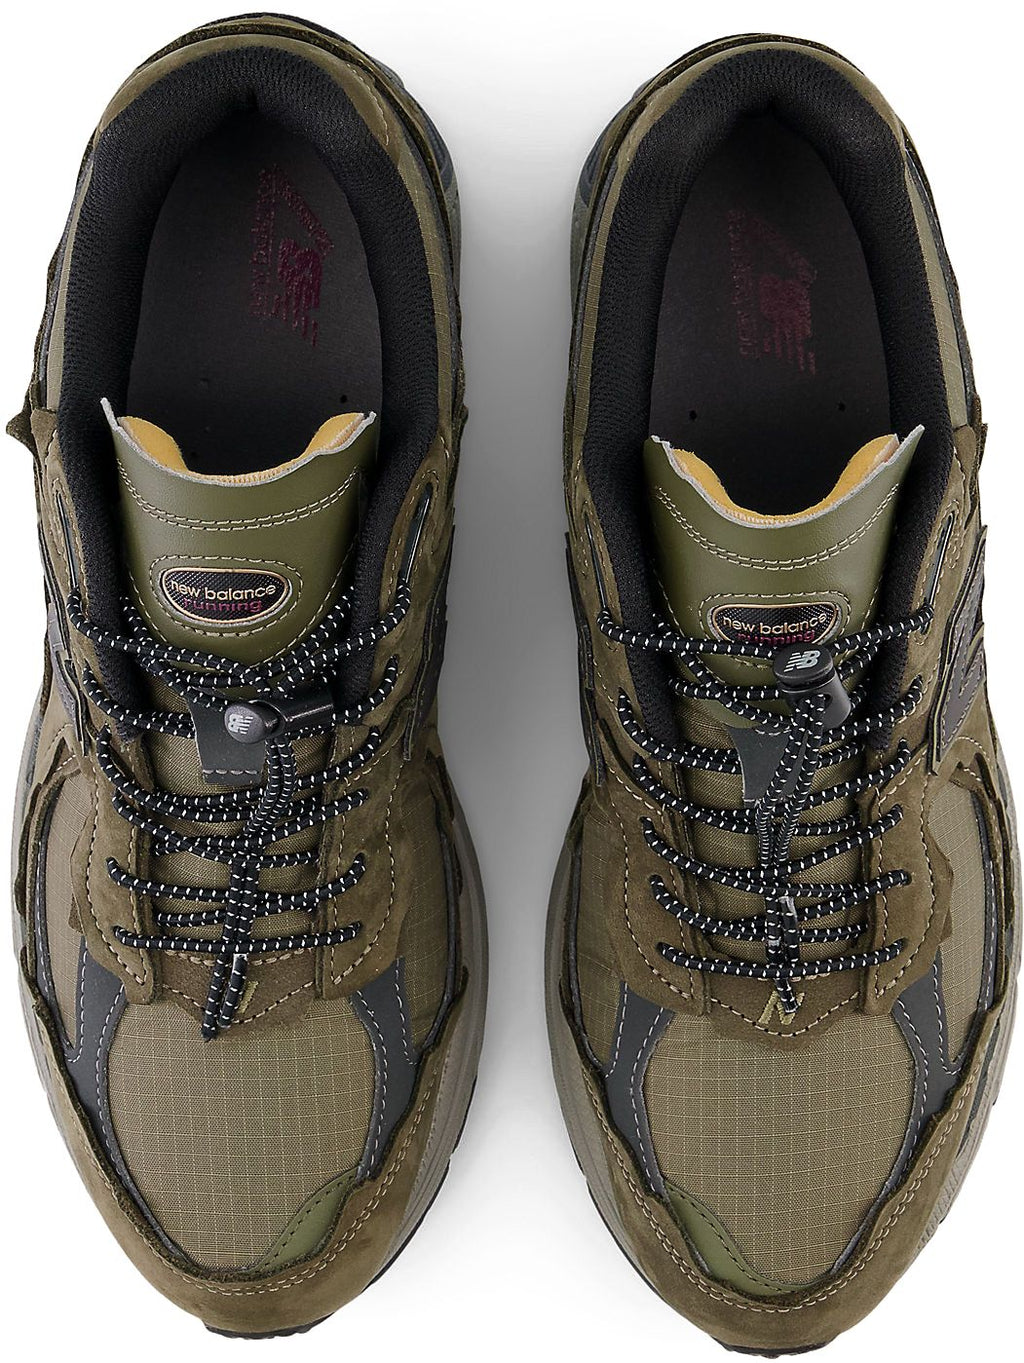  New Balance Scarpe M2002rdn Shoes Protection Pack Dark Moss Verde Uomo - 4